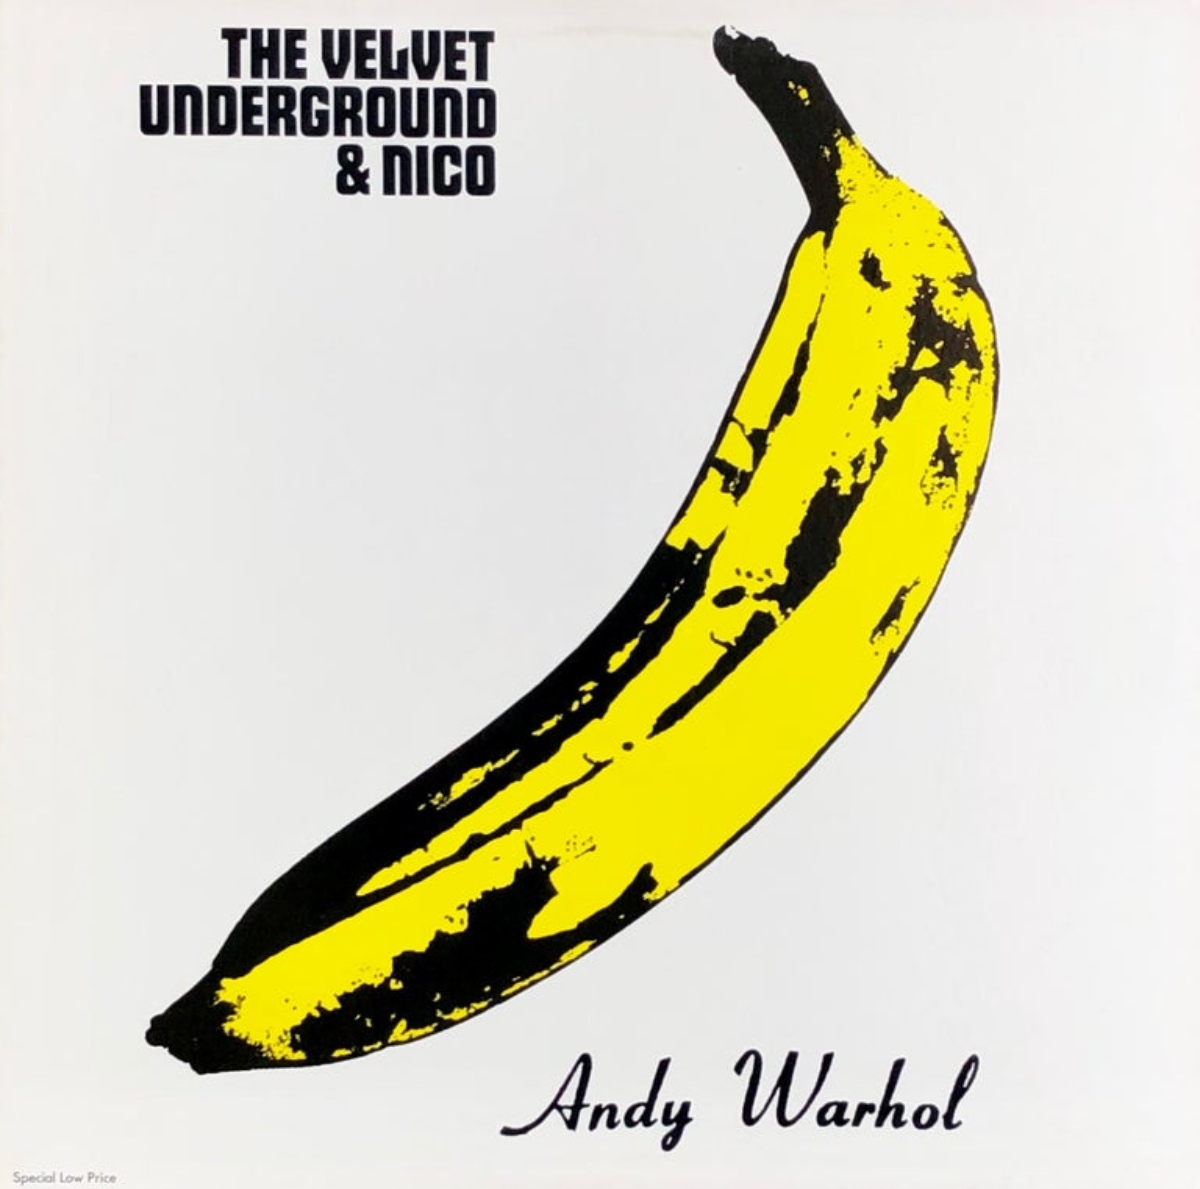 The famous cover of the album "The Velvet Underground & Nico"